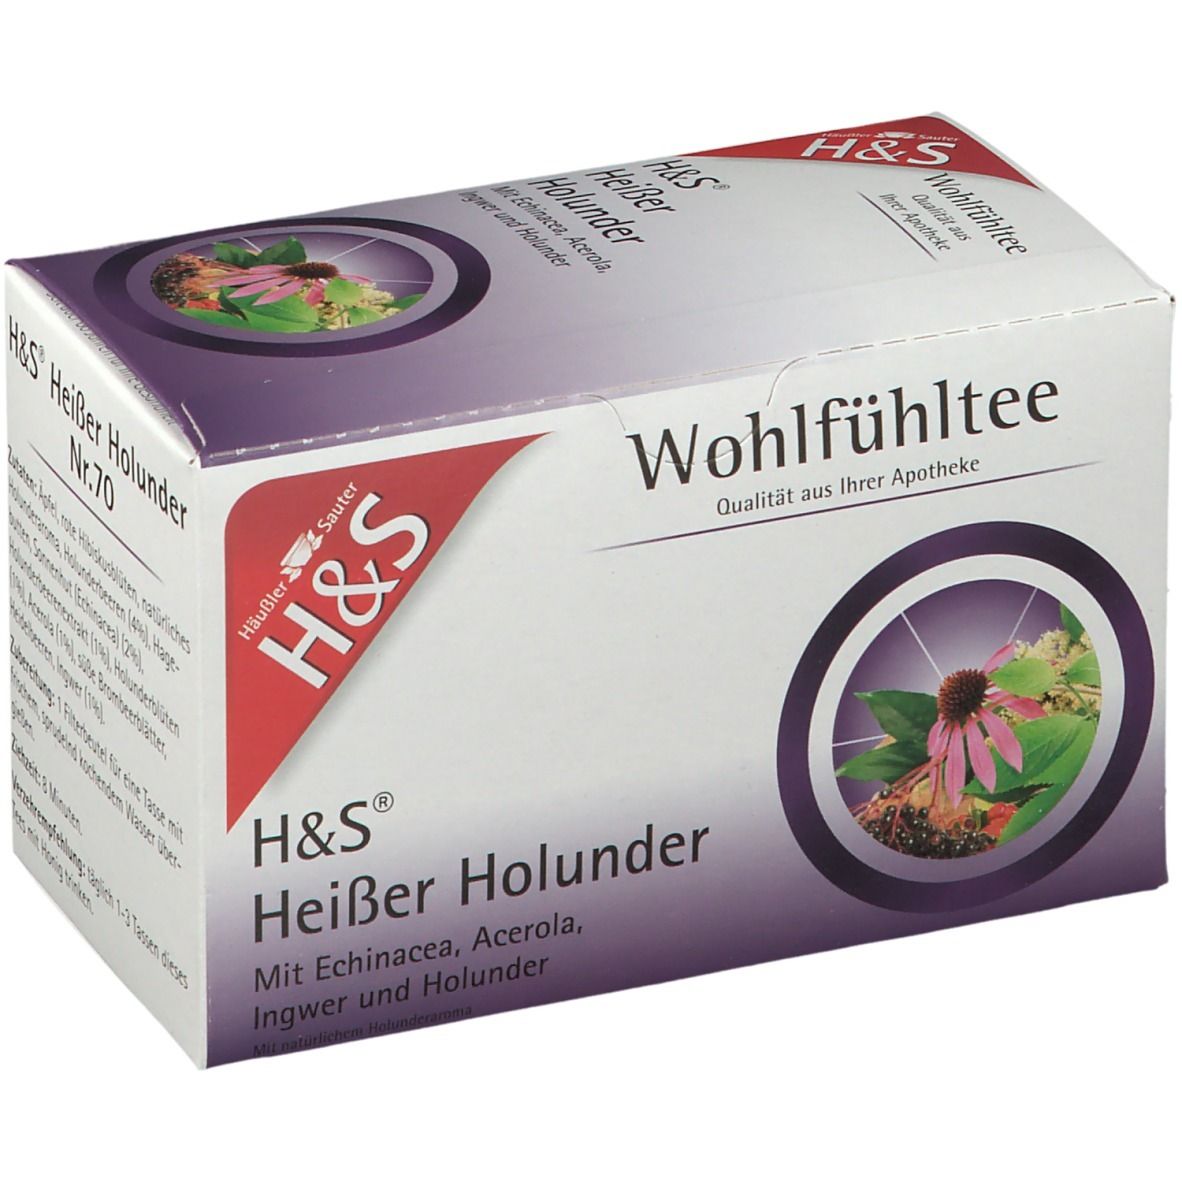 H&S Heißer Holunder Vitaltee Nr. 70